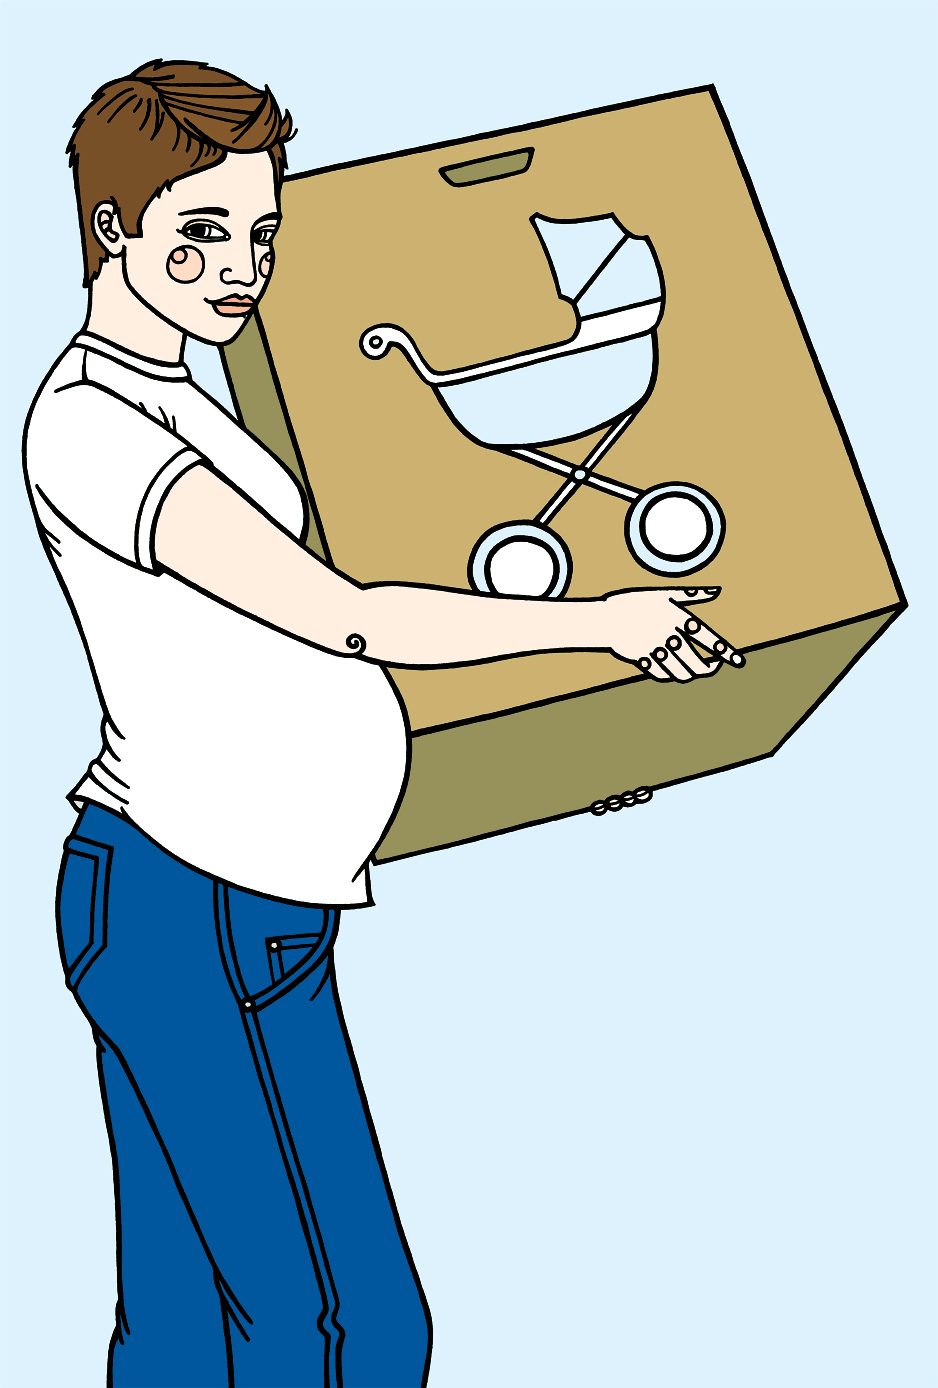 Cartoon Person of Butch pregnant Lesbian carrying a box